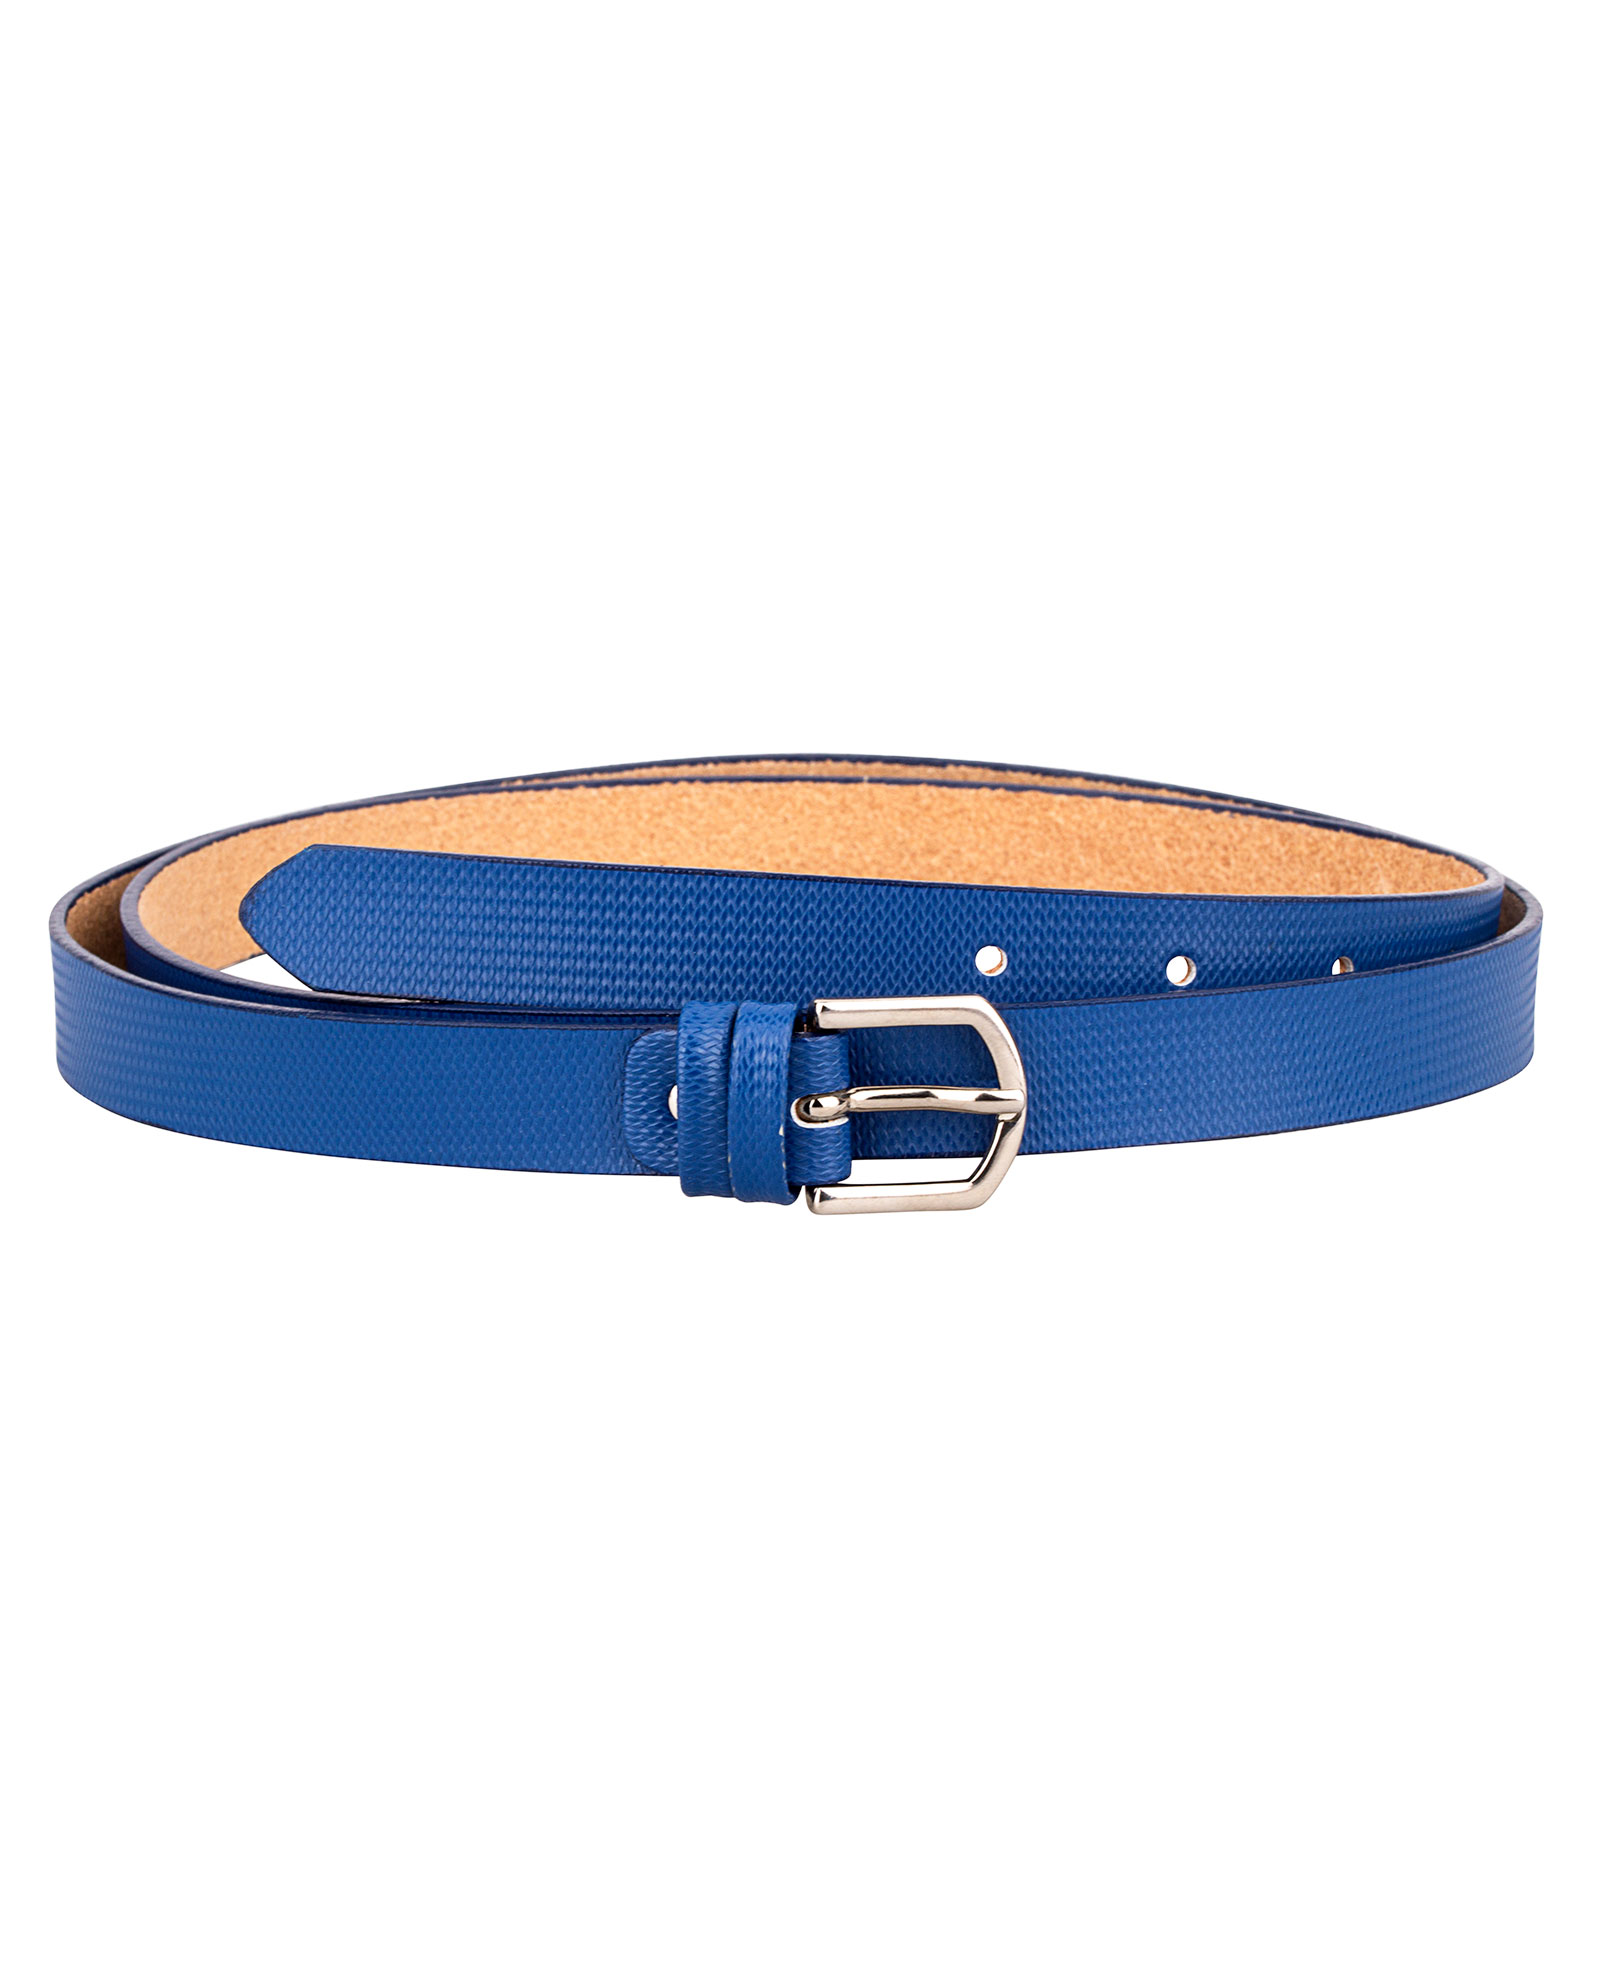 Buy Blue Leather Belt for Women - Skinny Embossed - Free Shipping